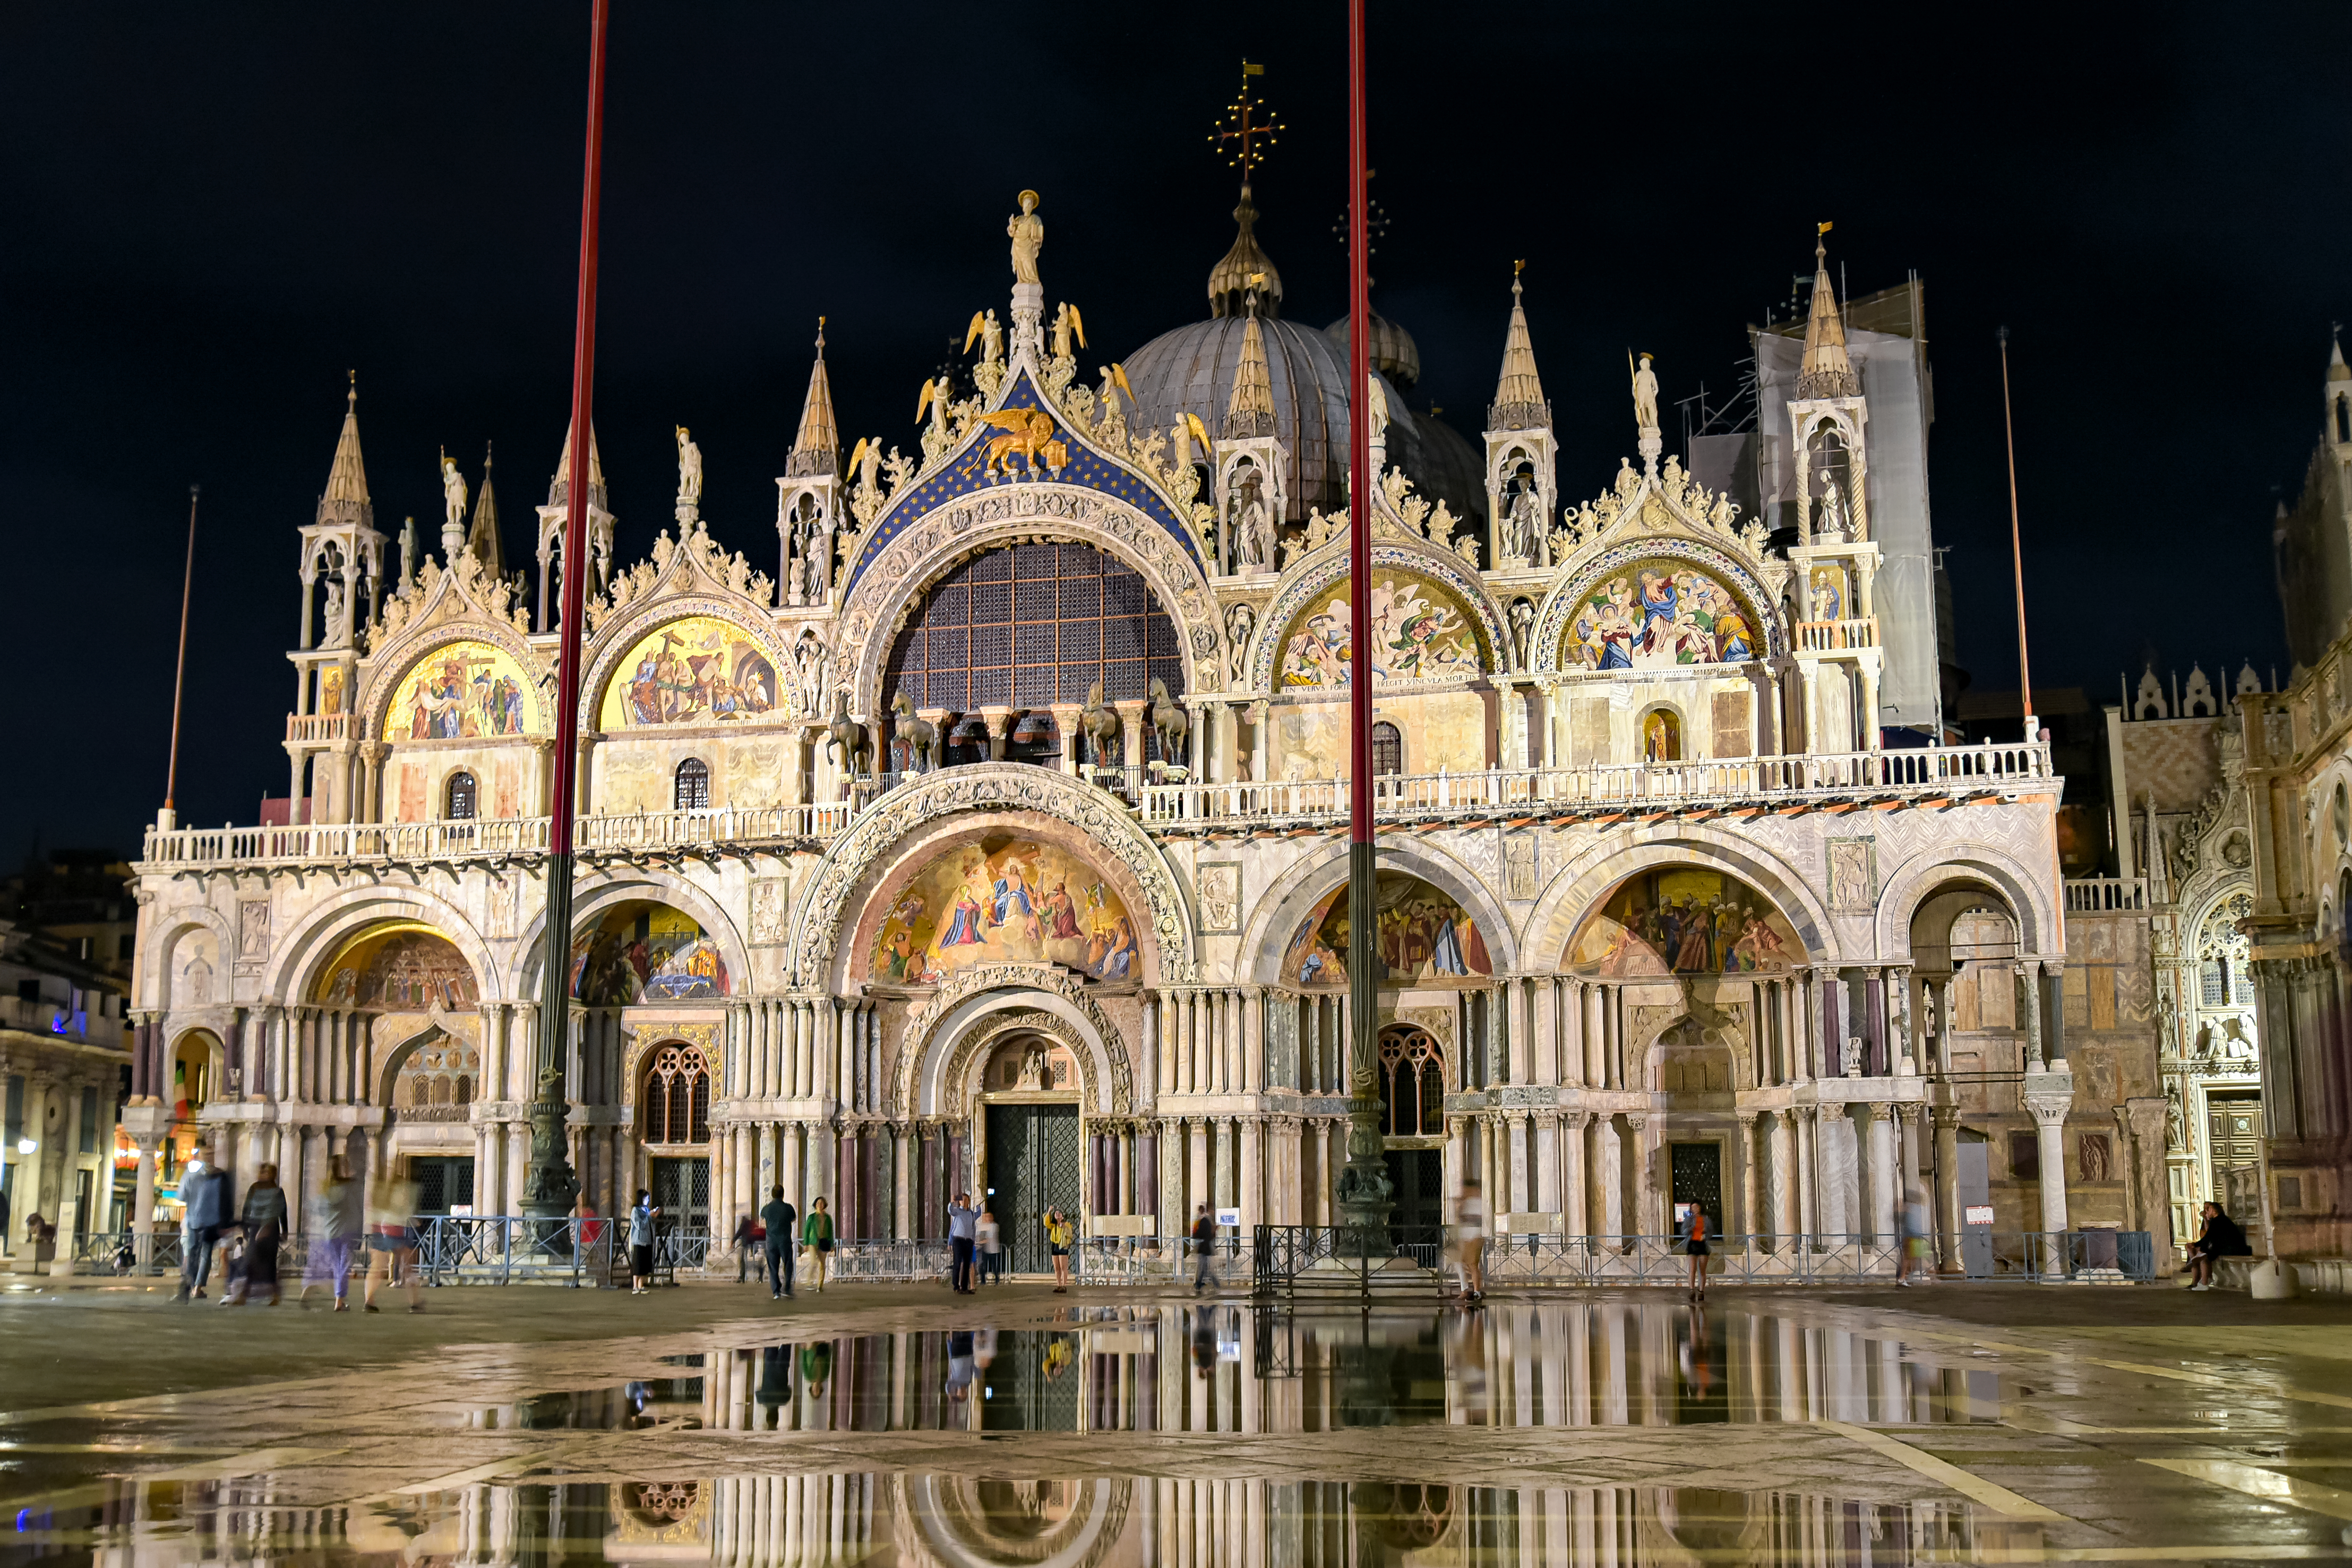  St Mark's Basilica, Venice.